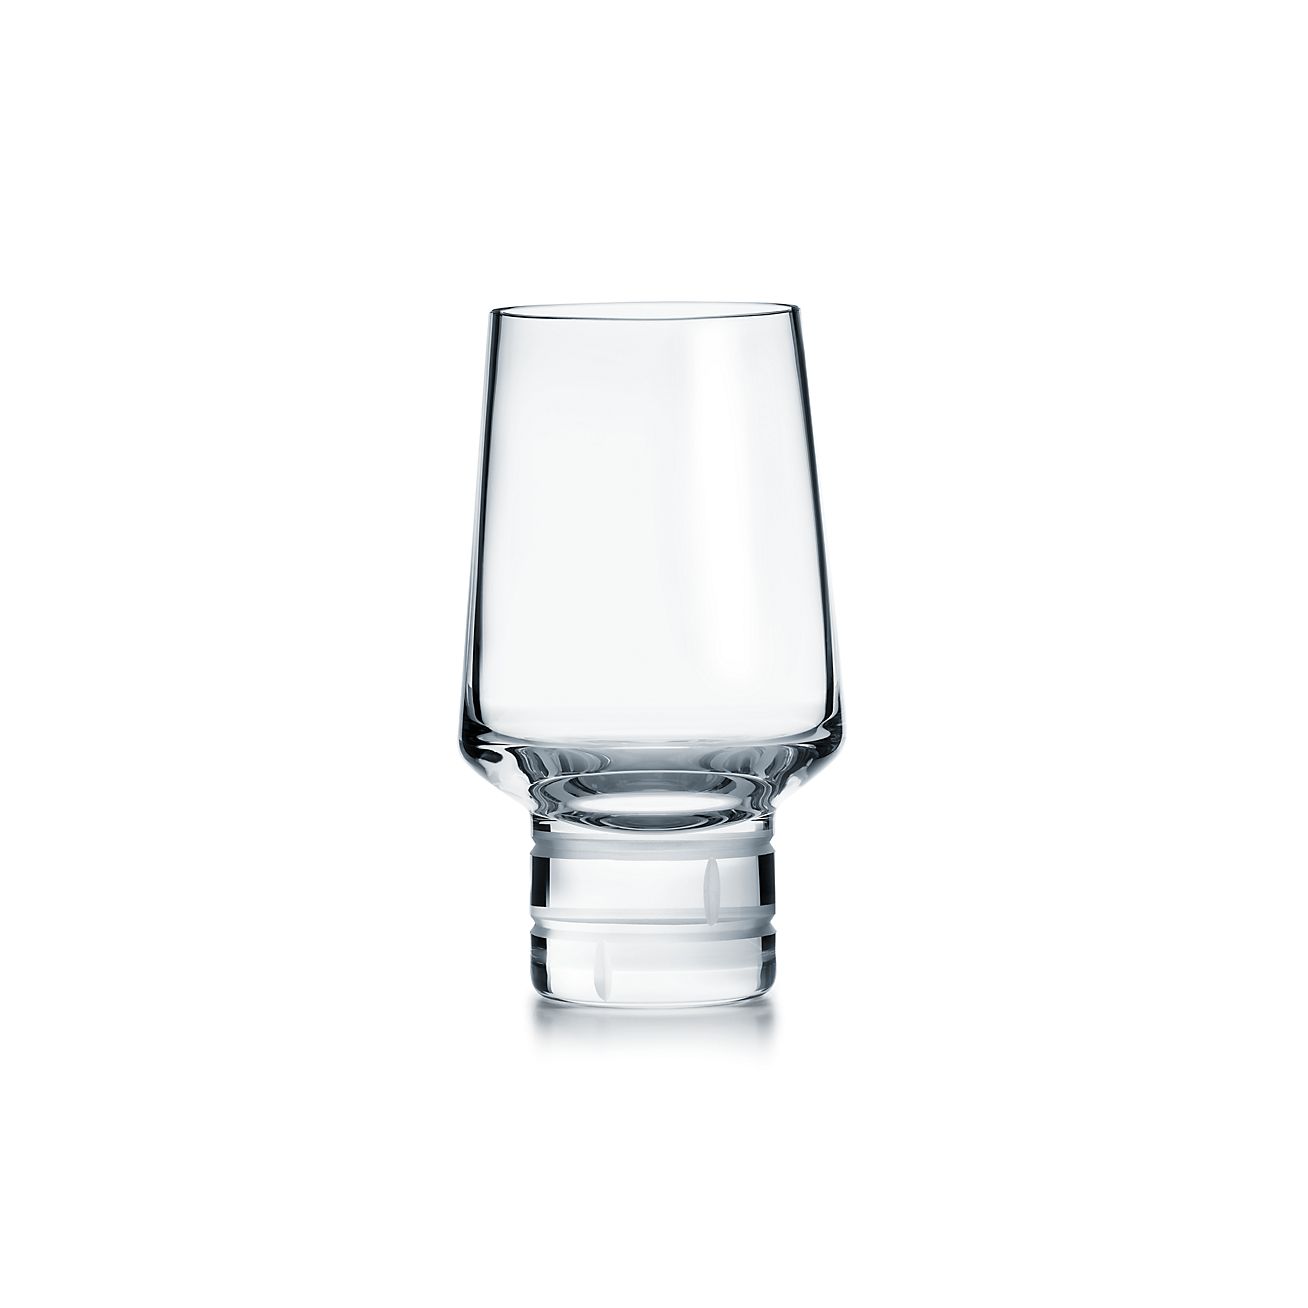 tiffany crystal wine glasses